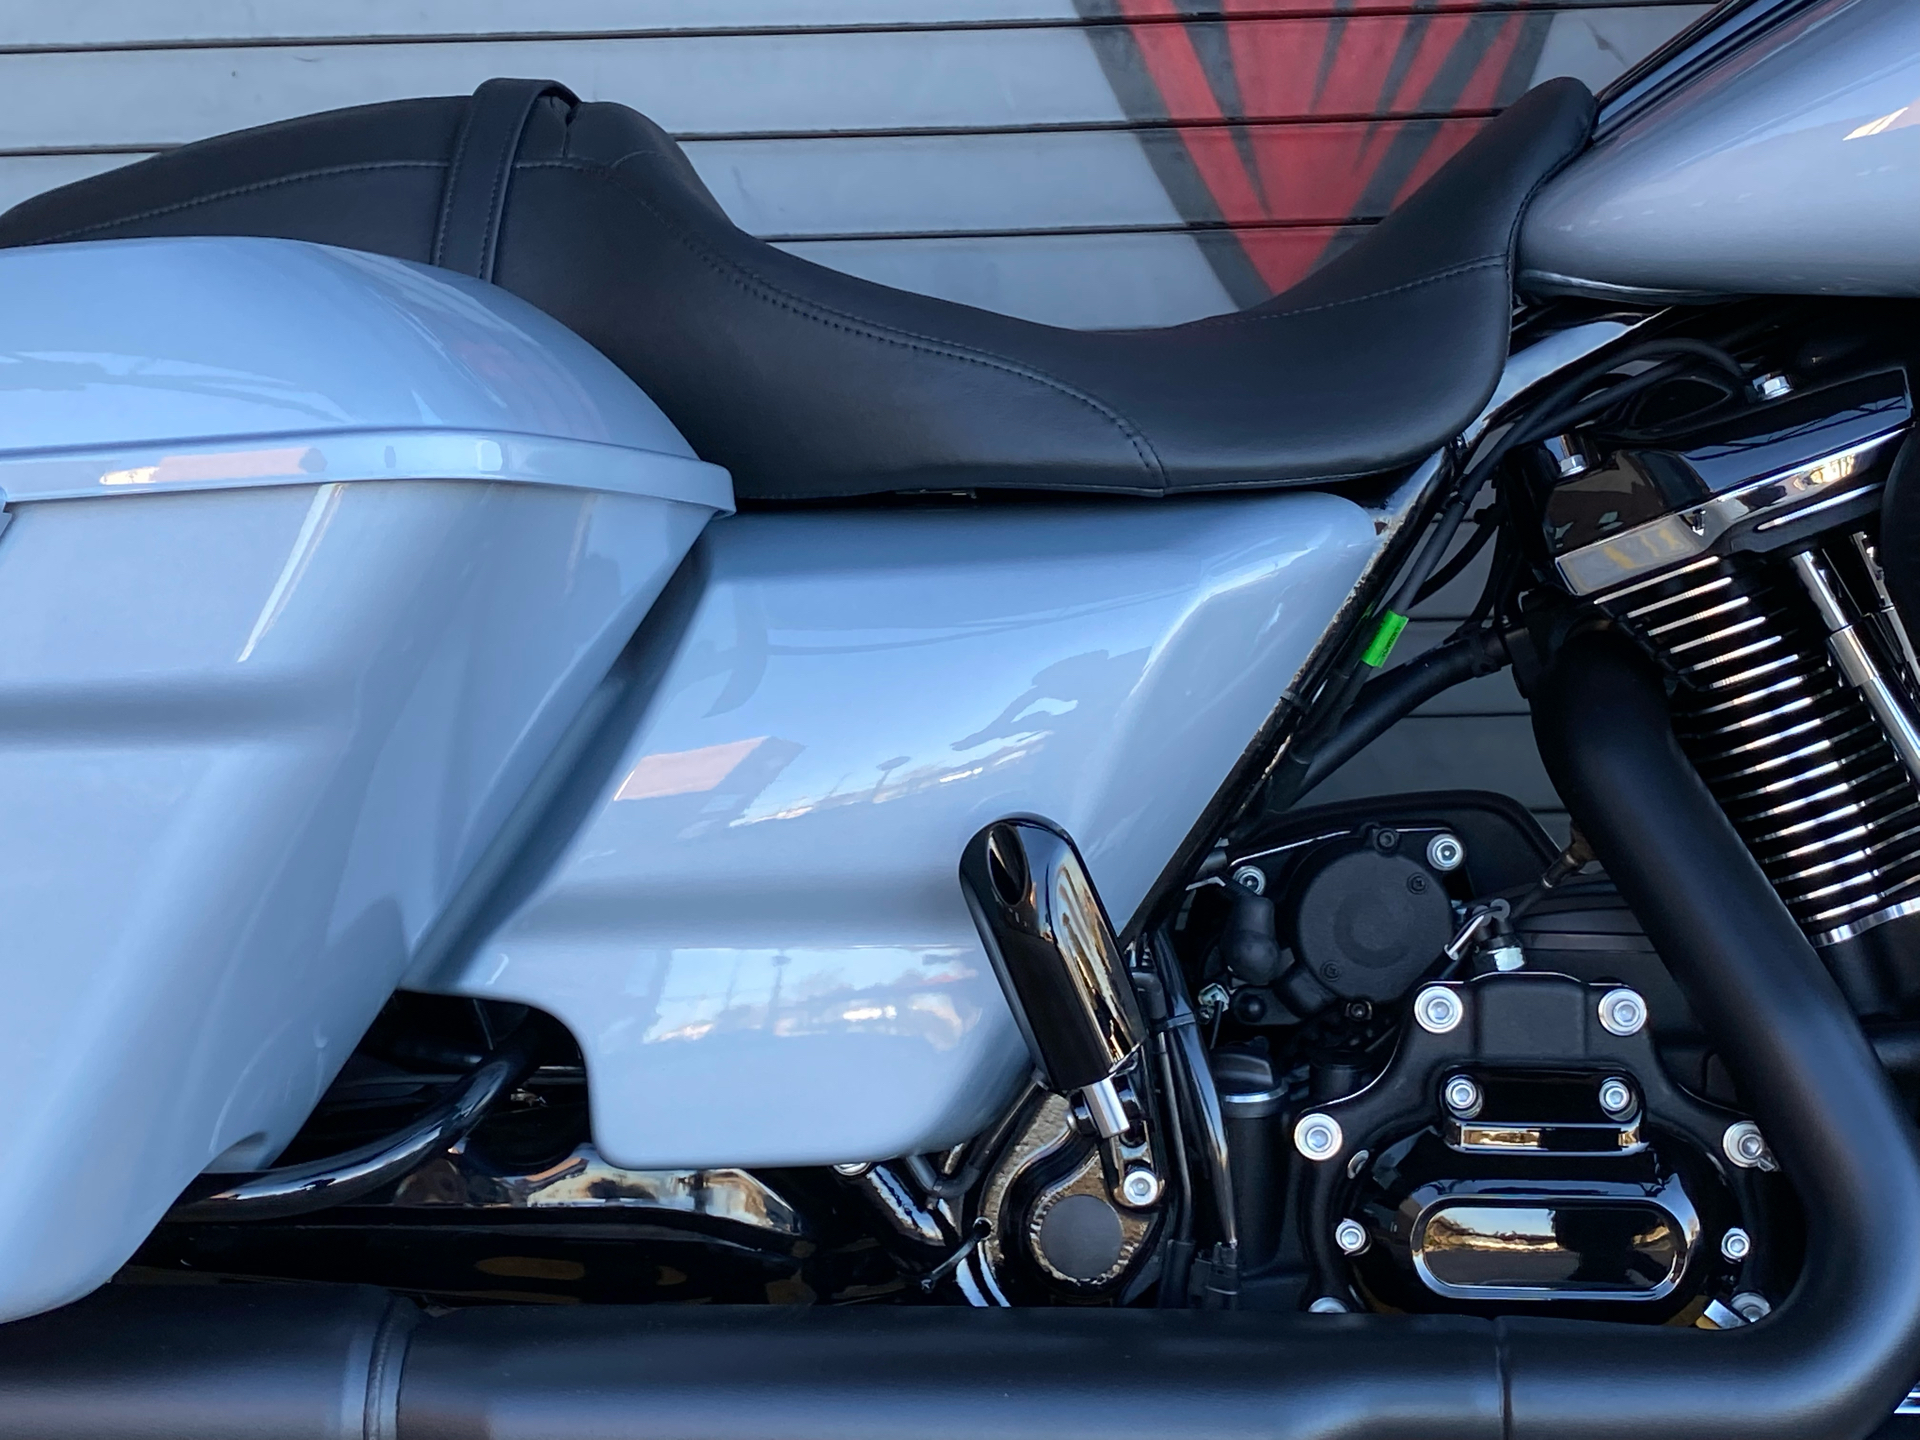 2023 Harley-Davidson Street Glide® Special in Carrollton, Texas - Photo 8